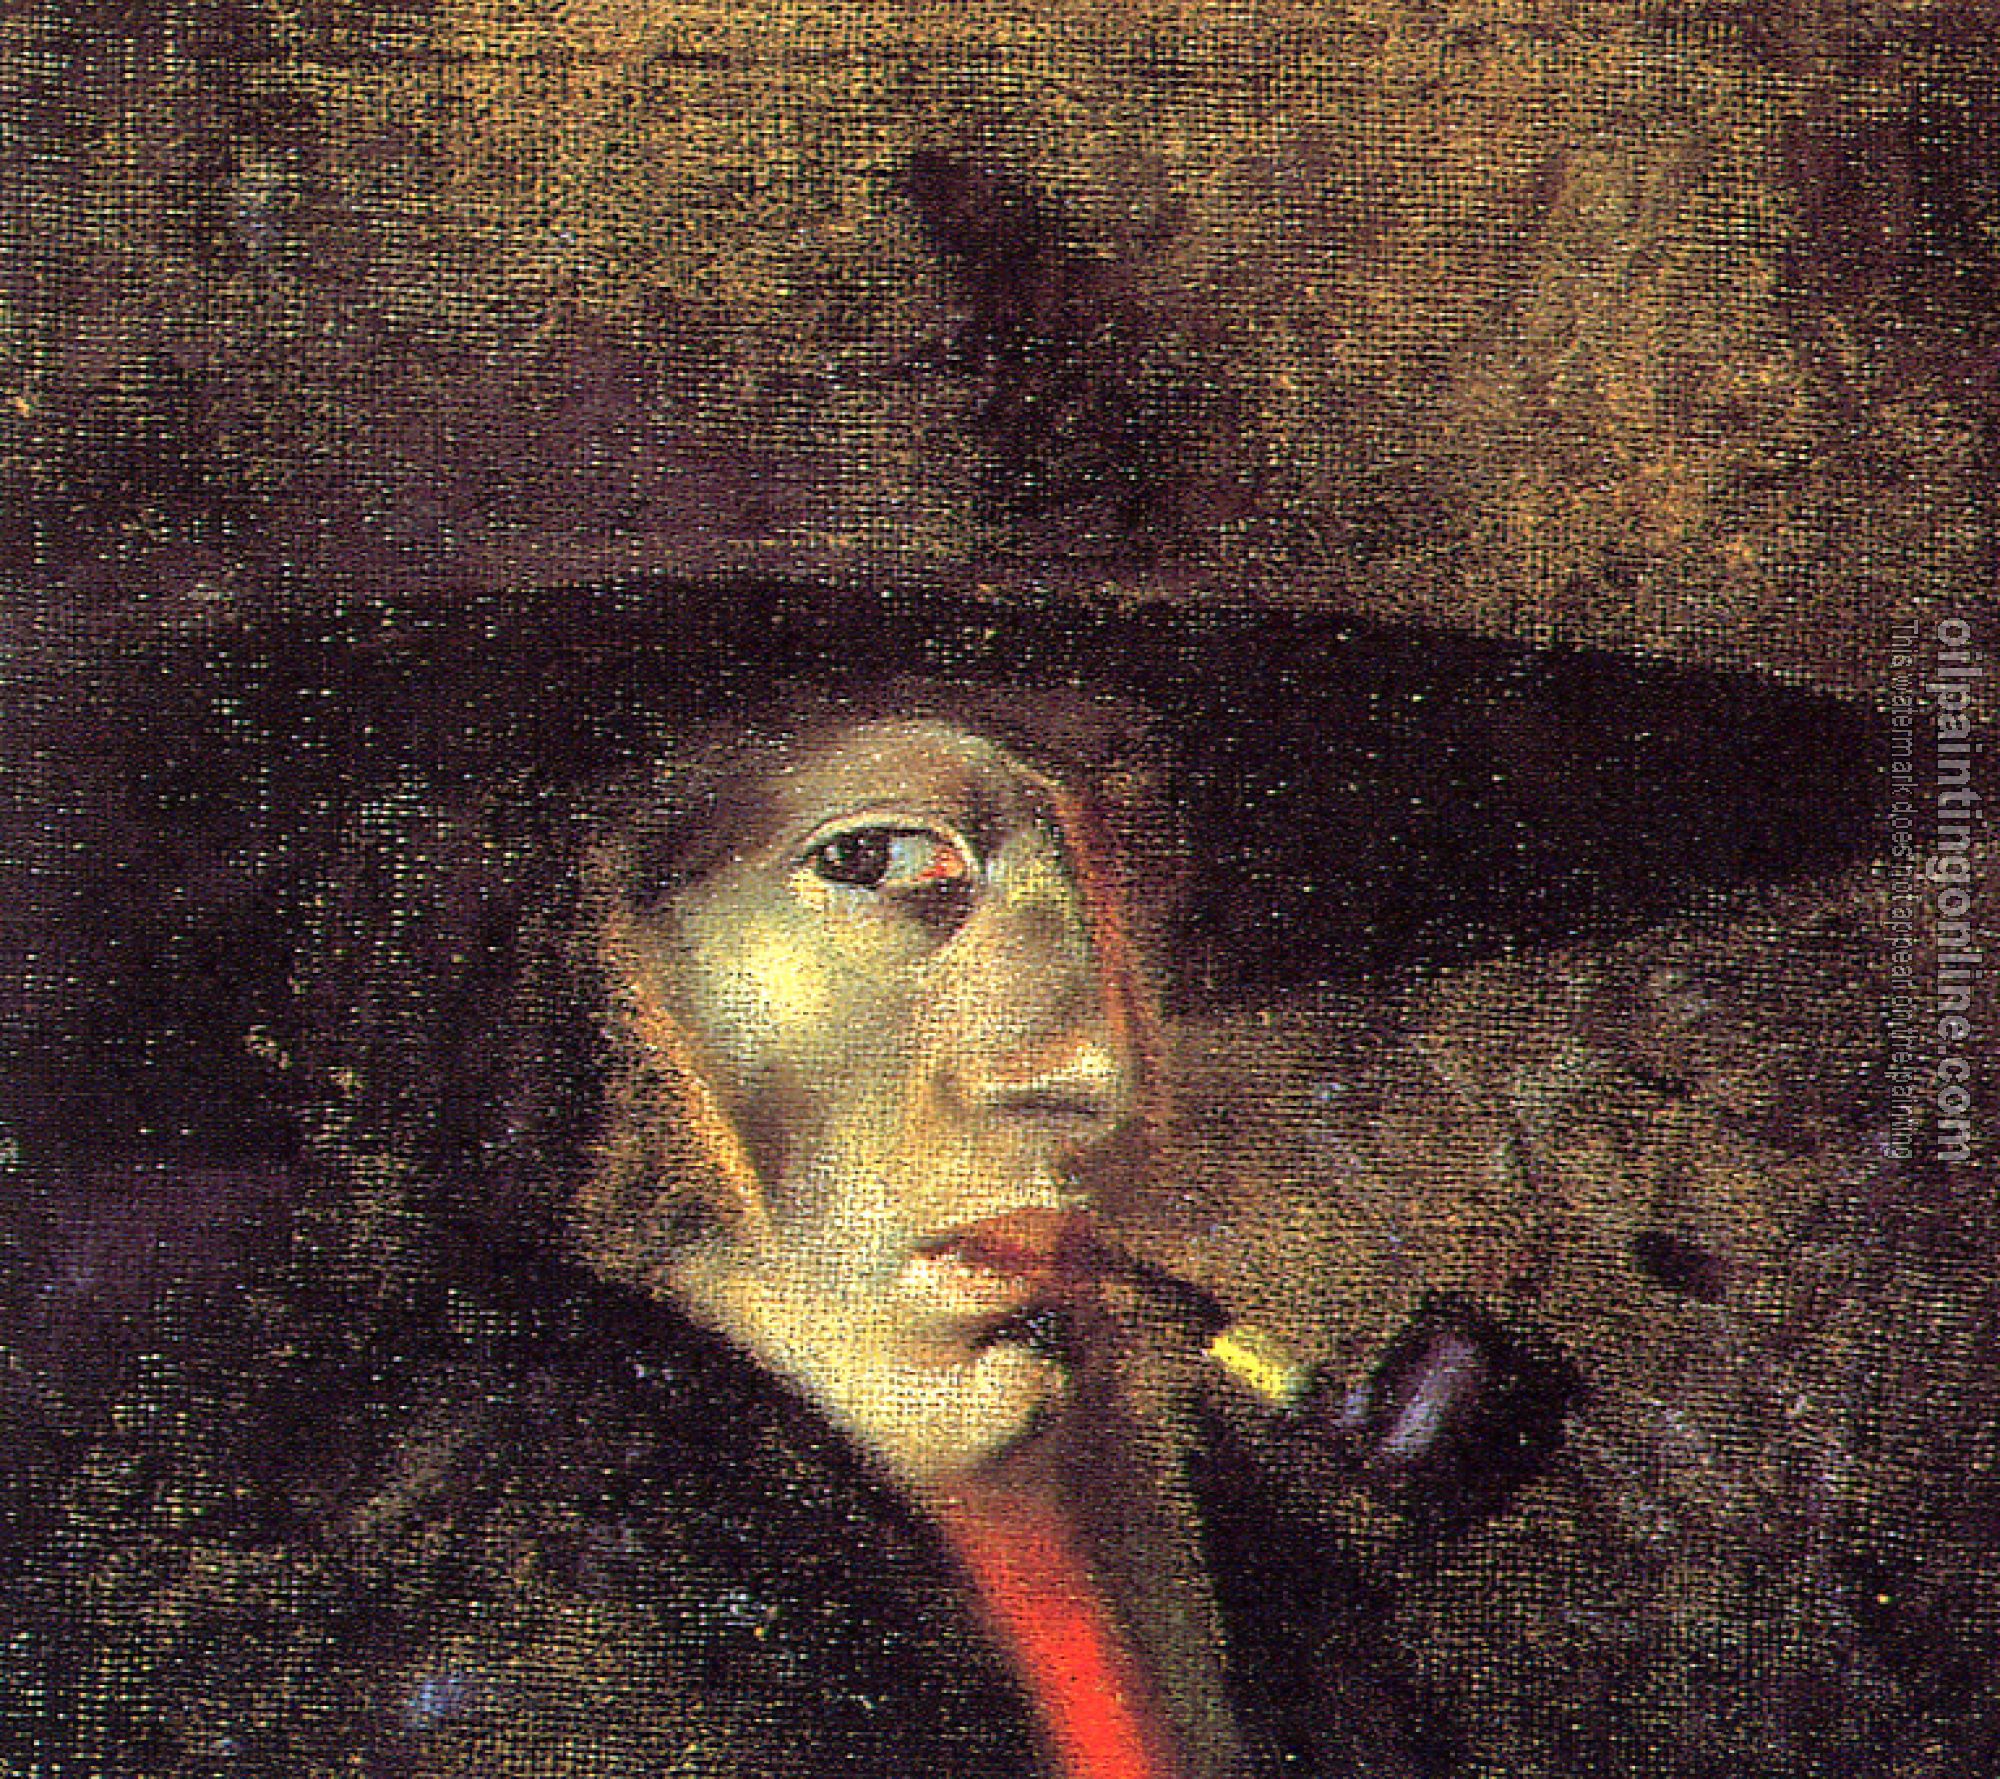 Dali, Salvador - self-portrait